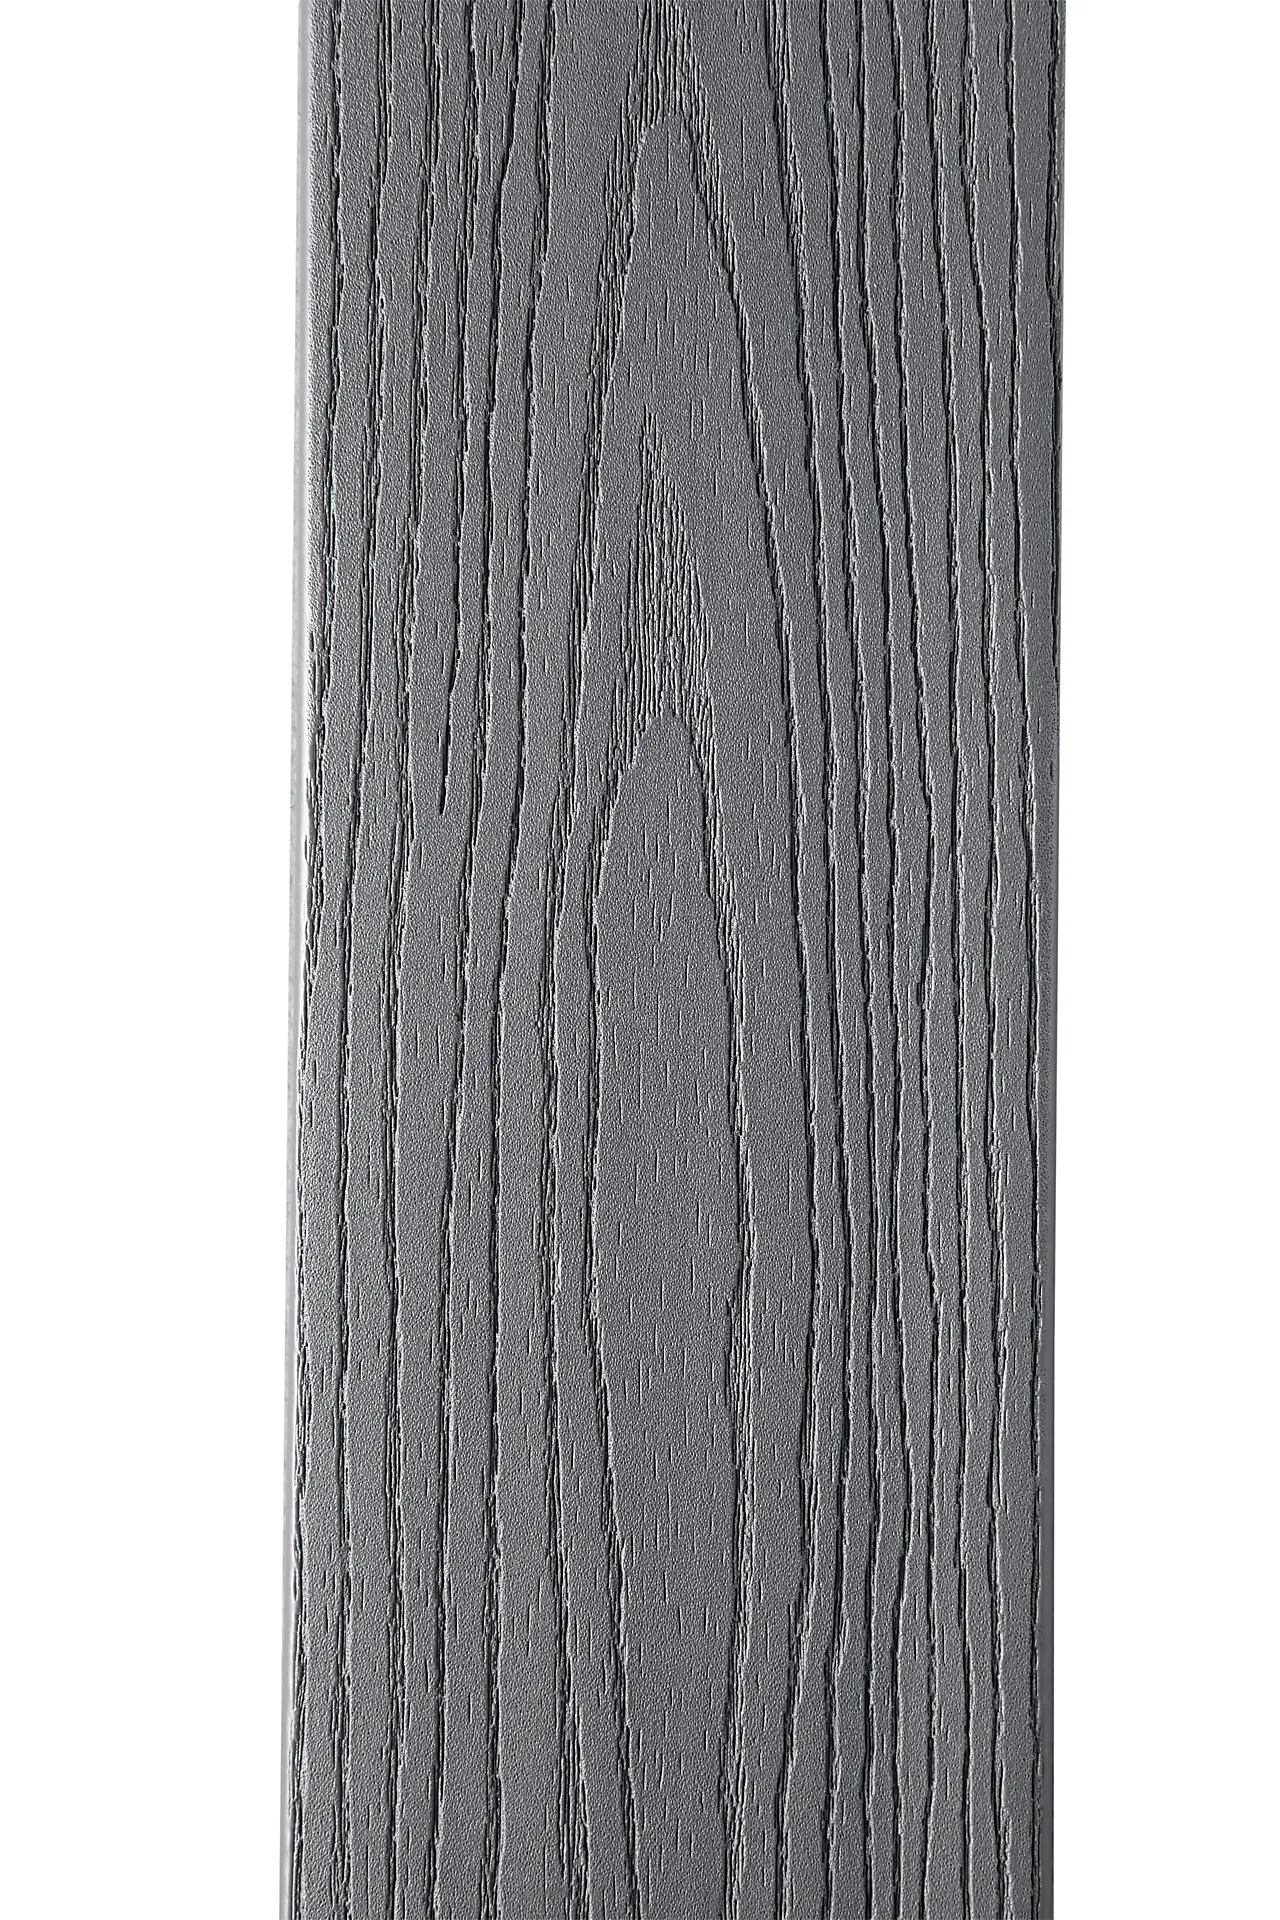 Kompositt terrassebord rettkant grå 24x137x4880 mm null - null - 3 - Miniatyr